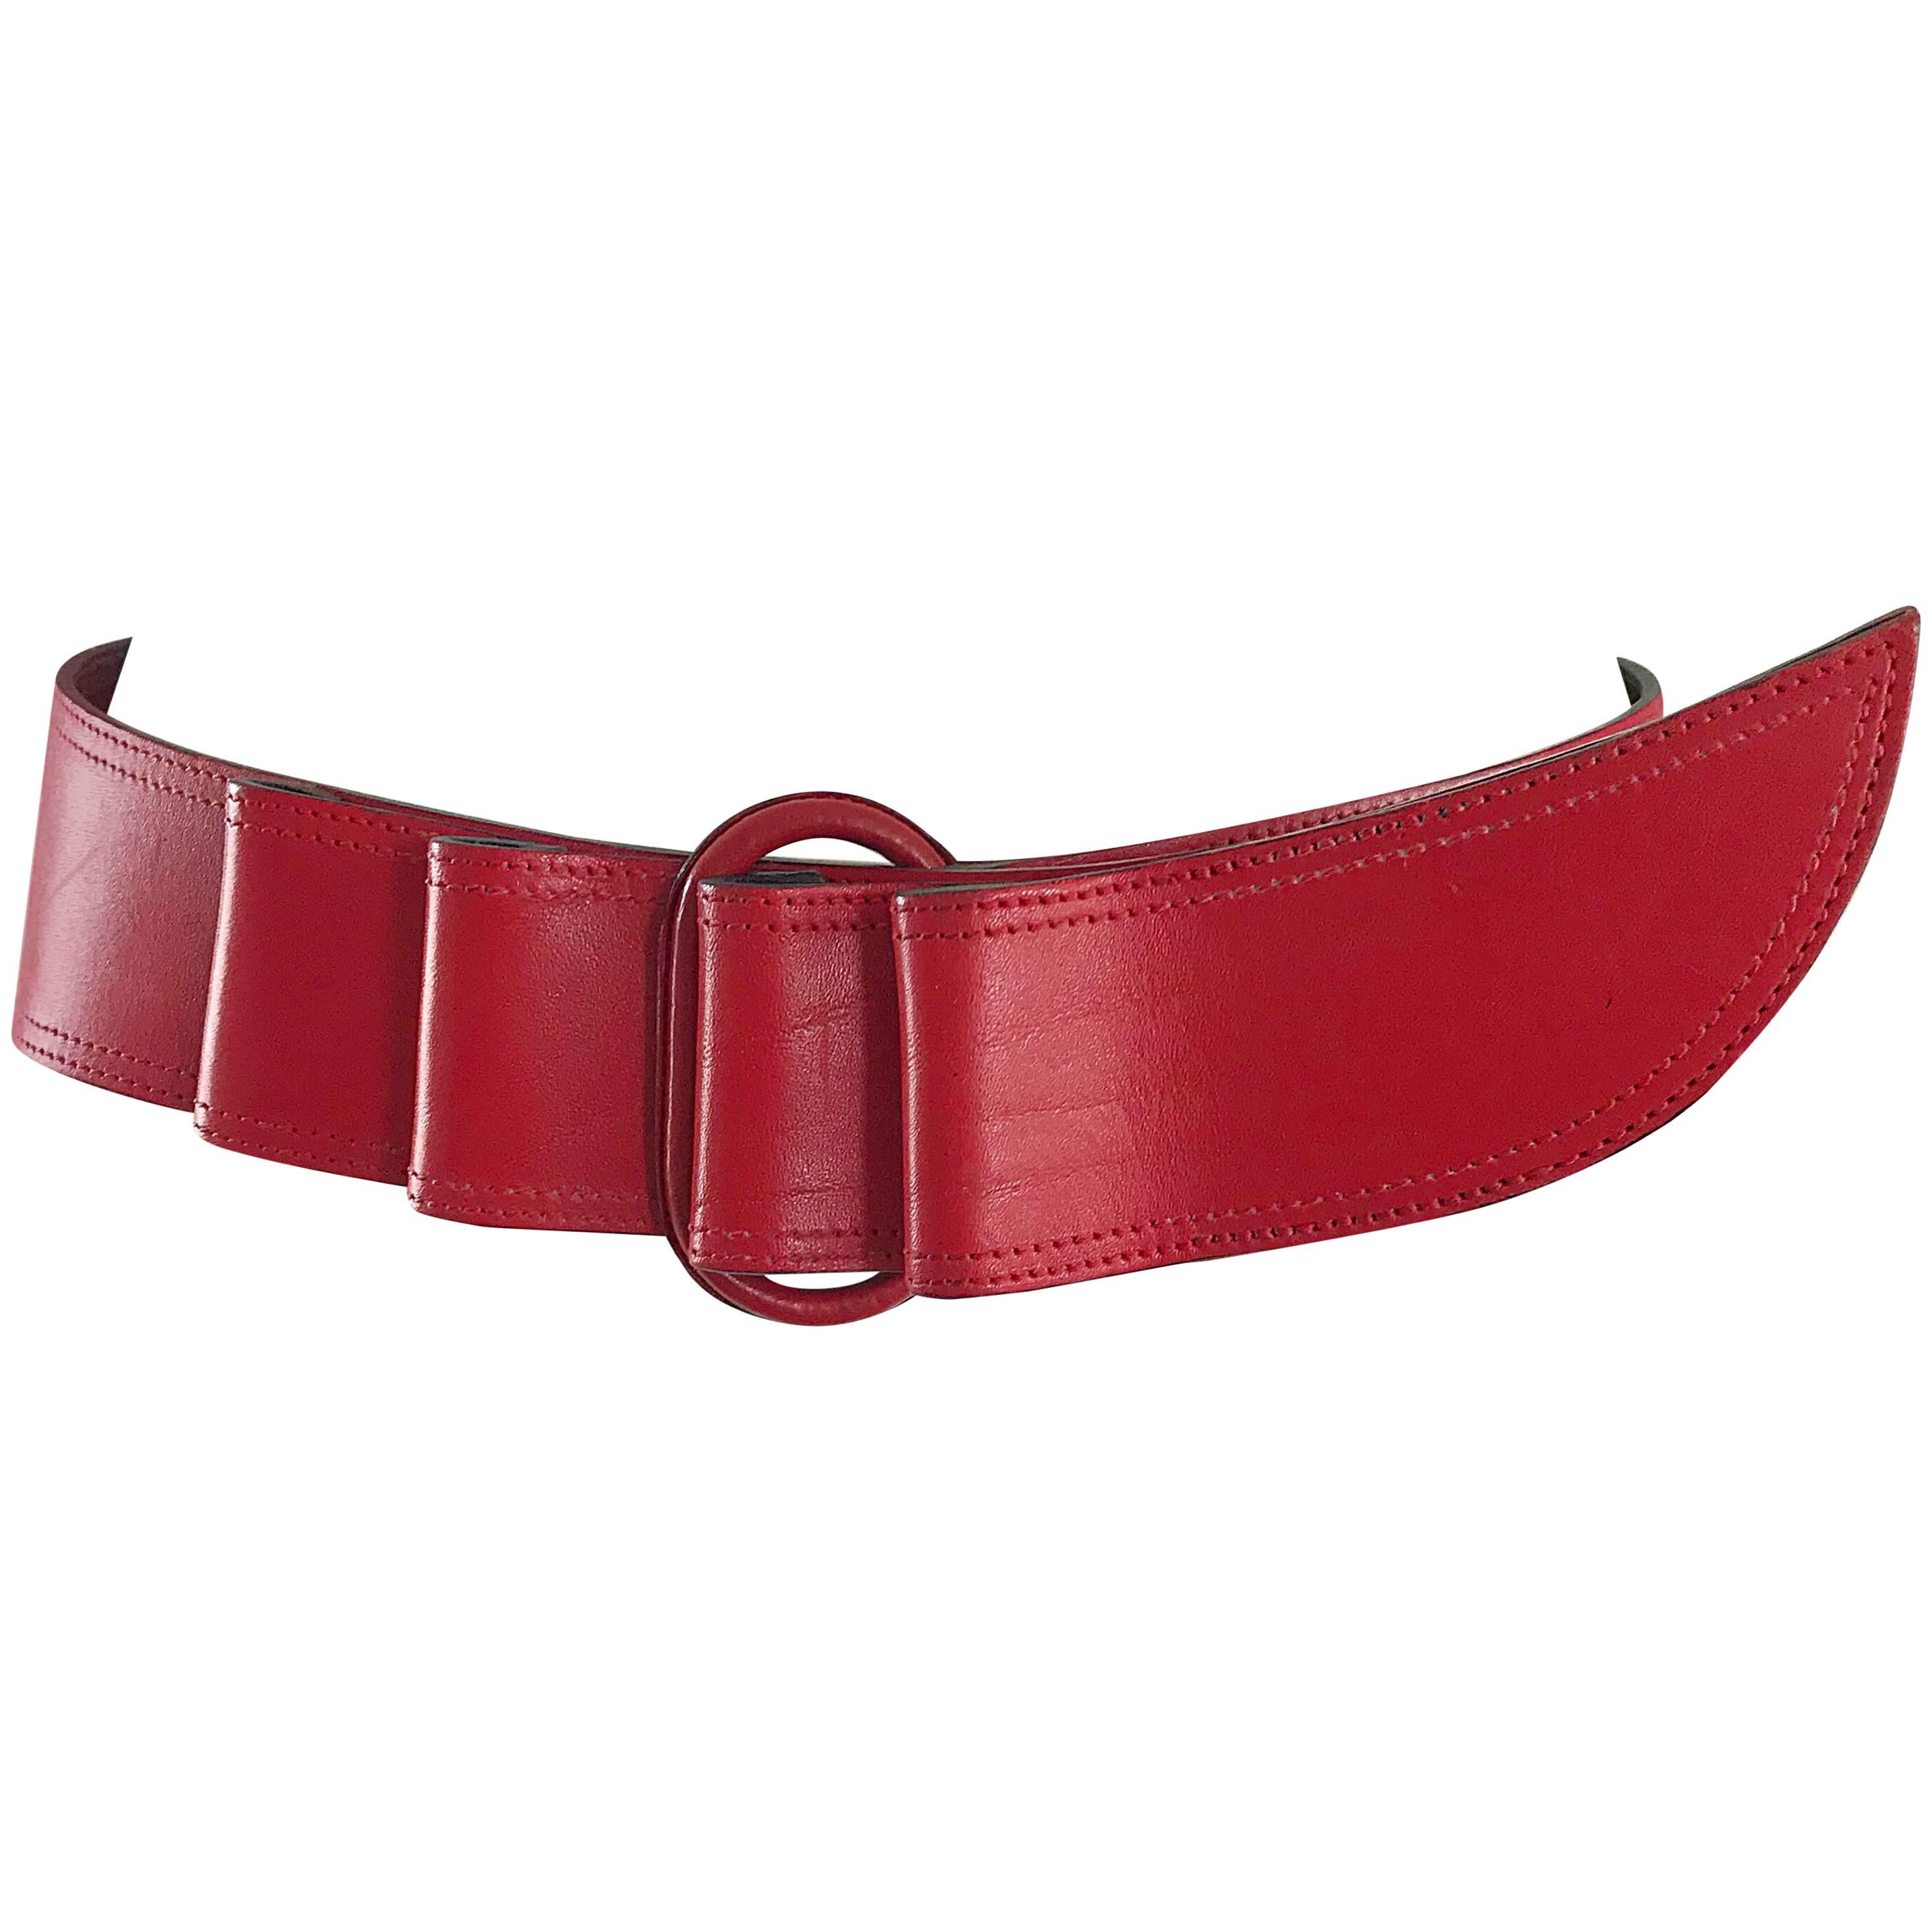 Claude Montana 1980s Avant Garde Lipstick Red Leather Vintage 80s Belt